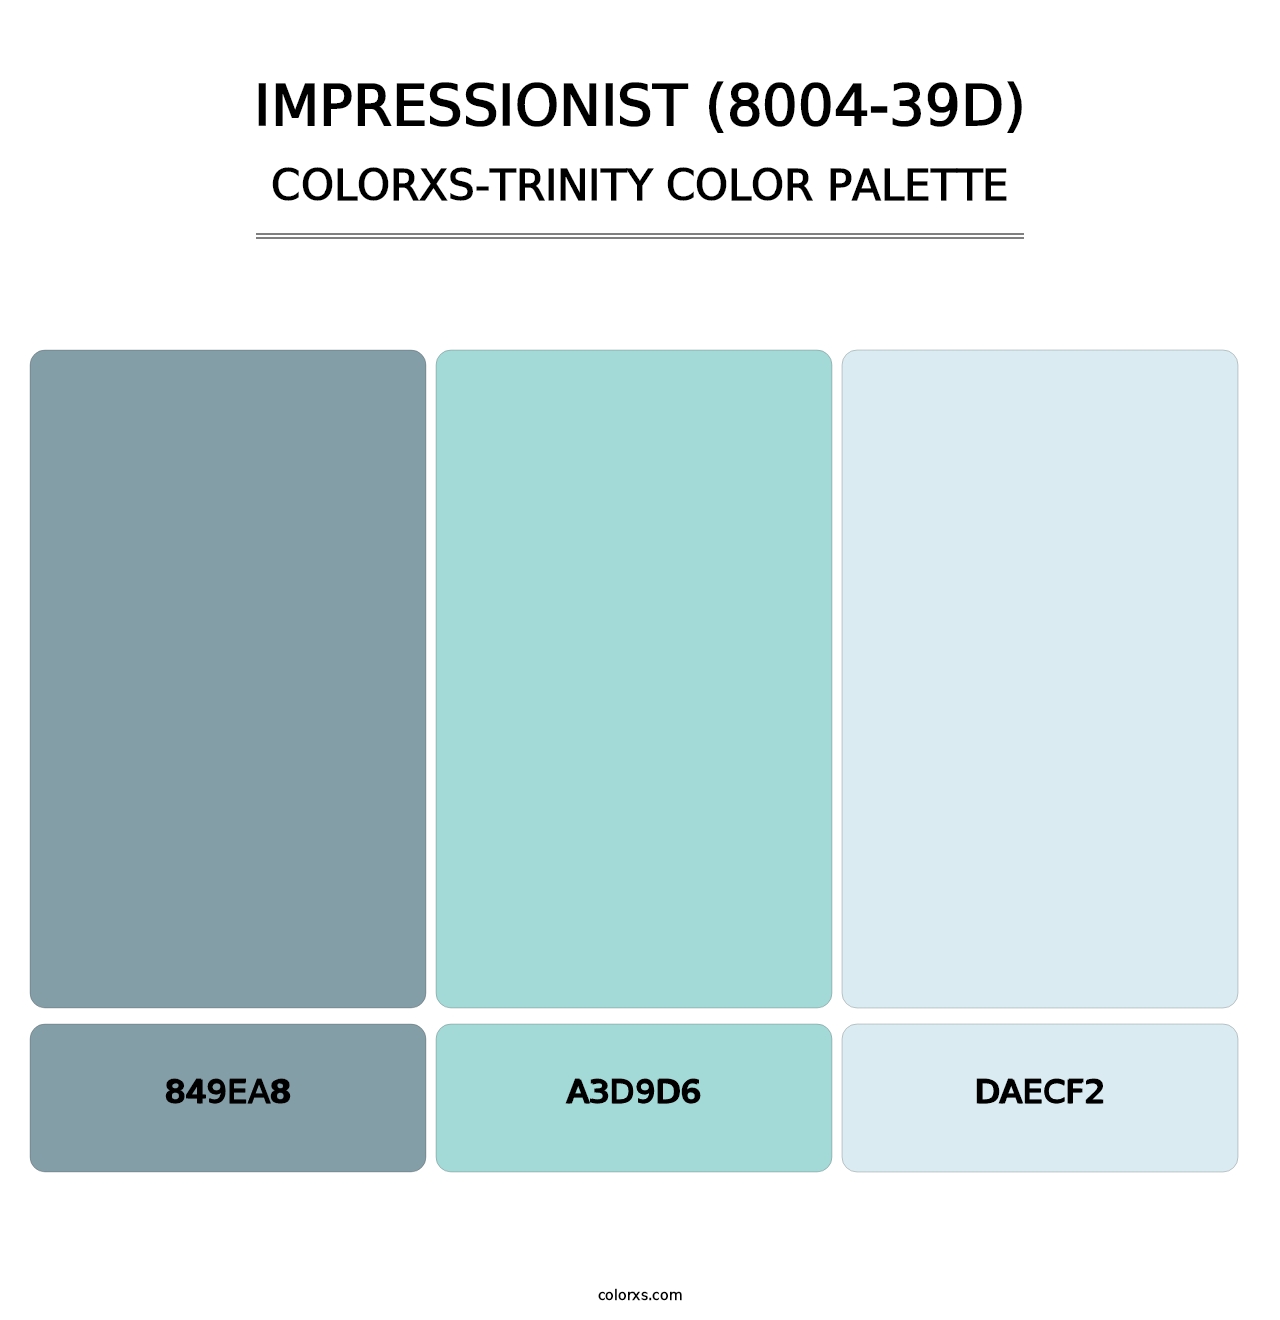 Impressionist (8004-39D) - Colorxs Trinity Palette